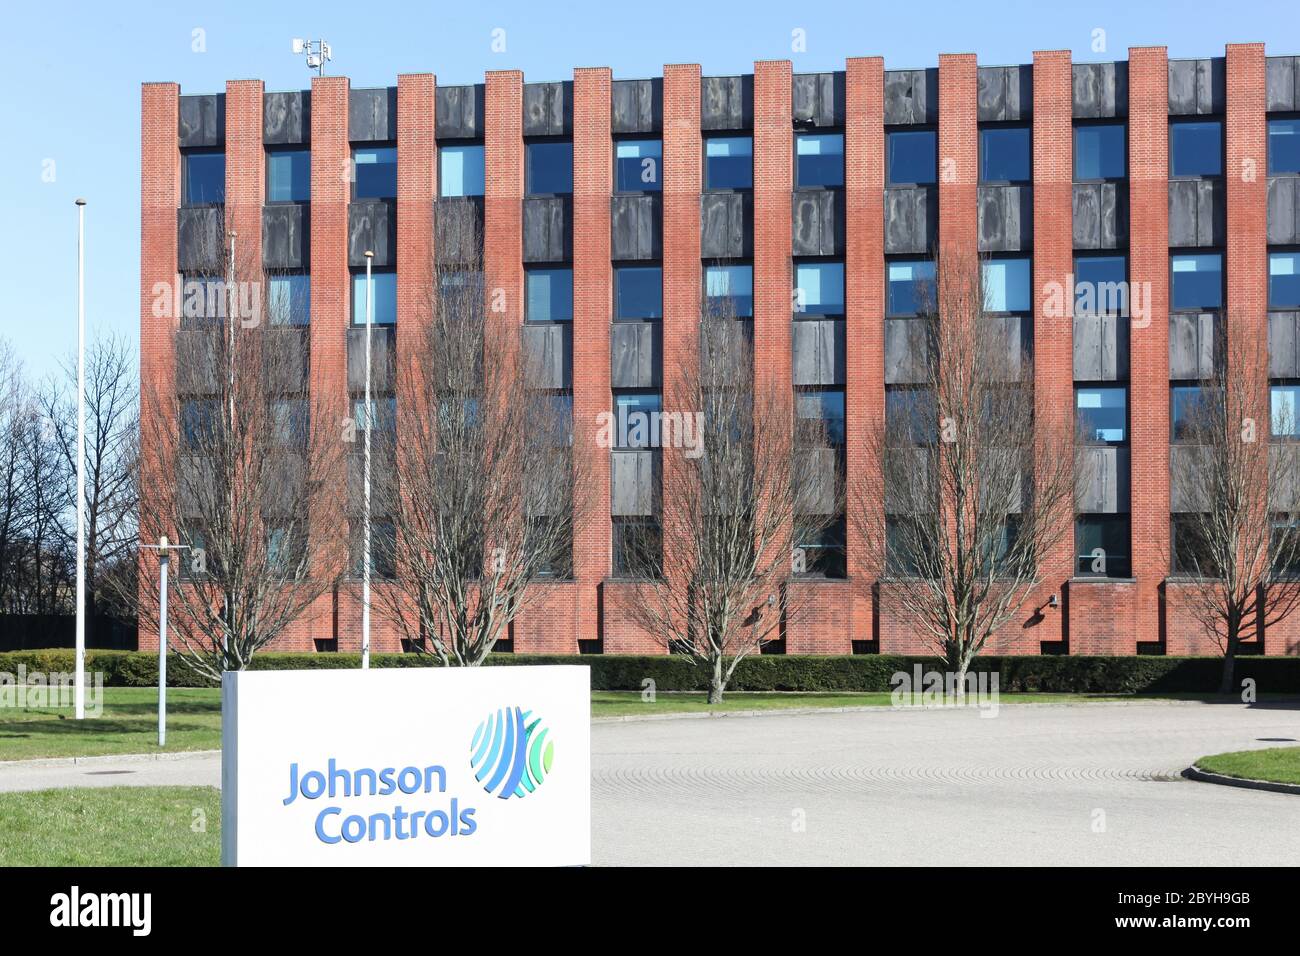 Holme, Dänemark - 26. März 2017: Johnson kontrolliert Bürogebäude. Johnson Controls ist ein US-amerikanischer multinationaler Konzern Stockfoto